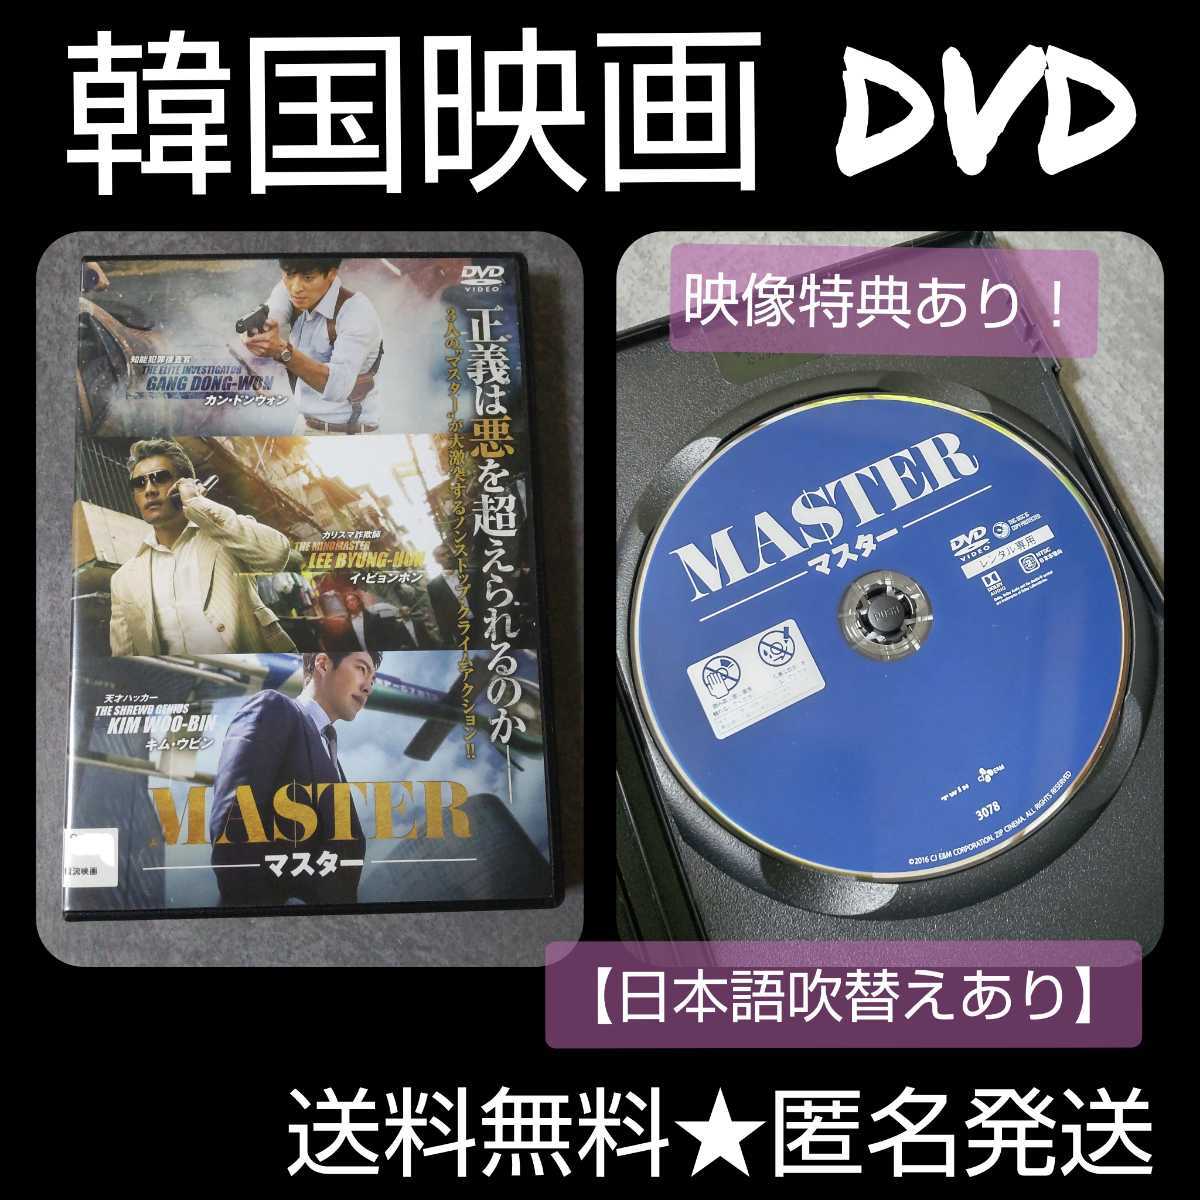 [ Korea movie ]DVD*[MASTER/ master ]( all story )* Kim *u bin 